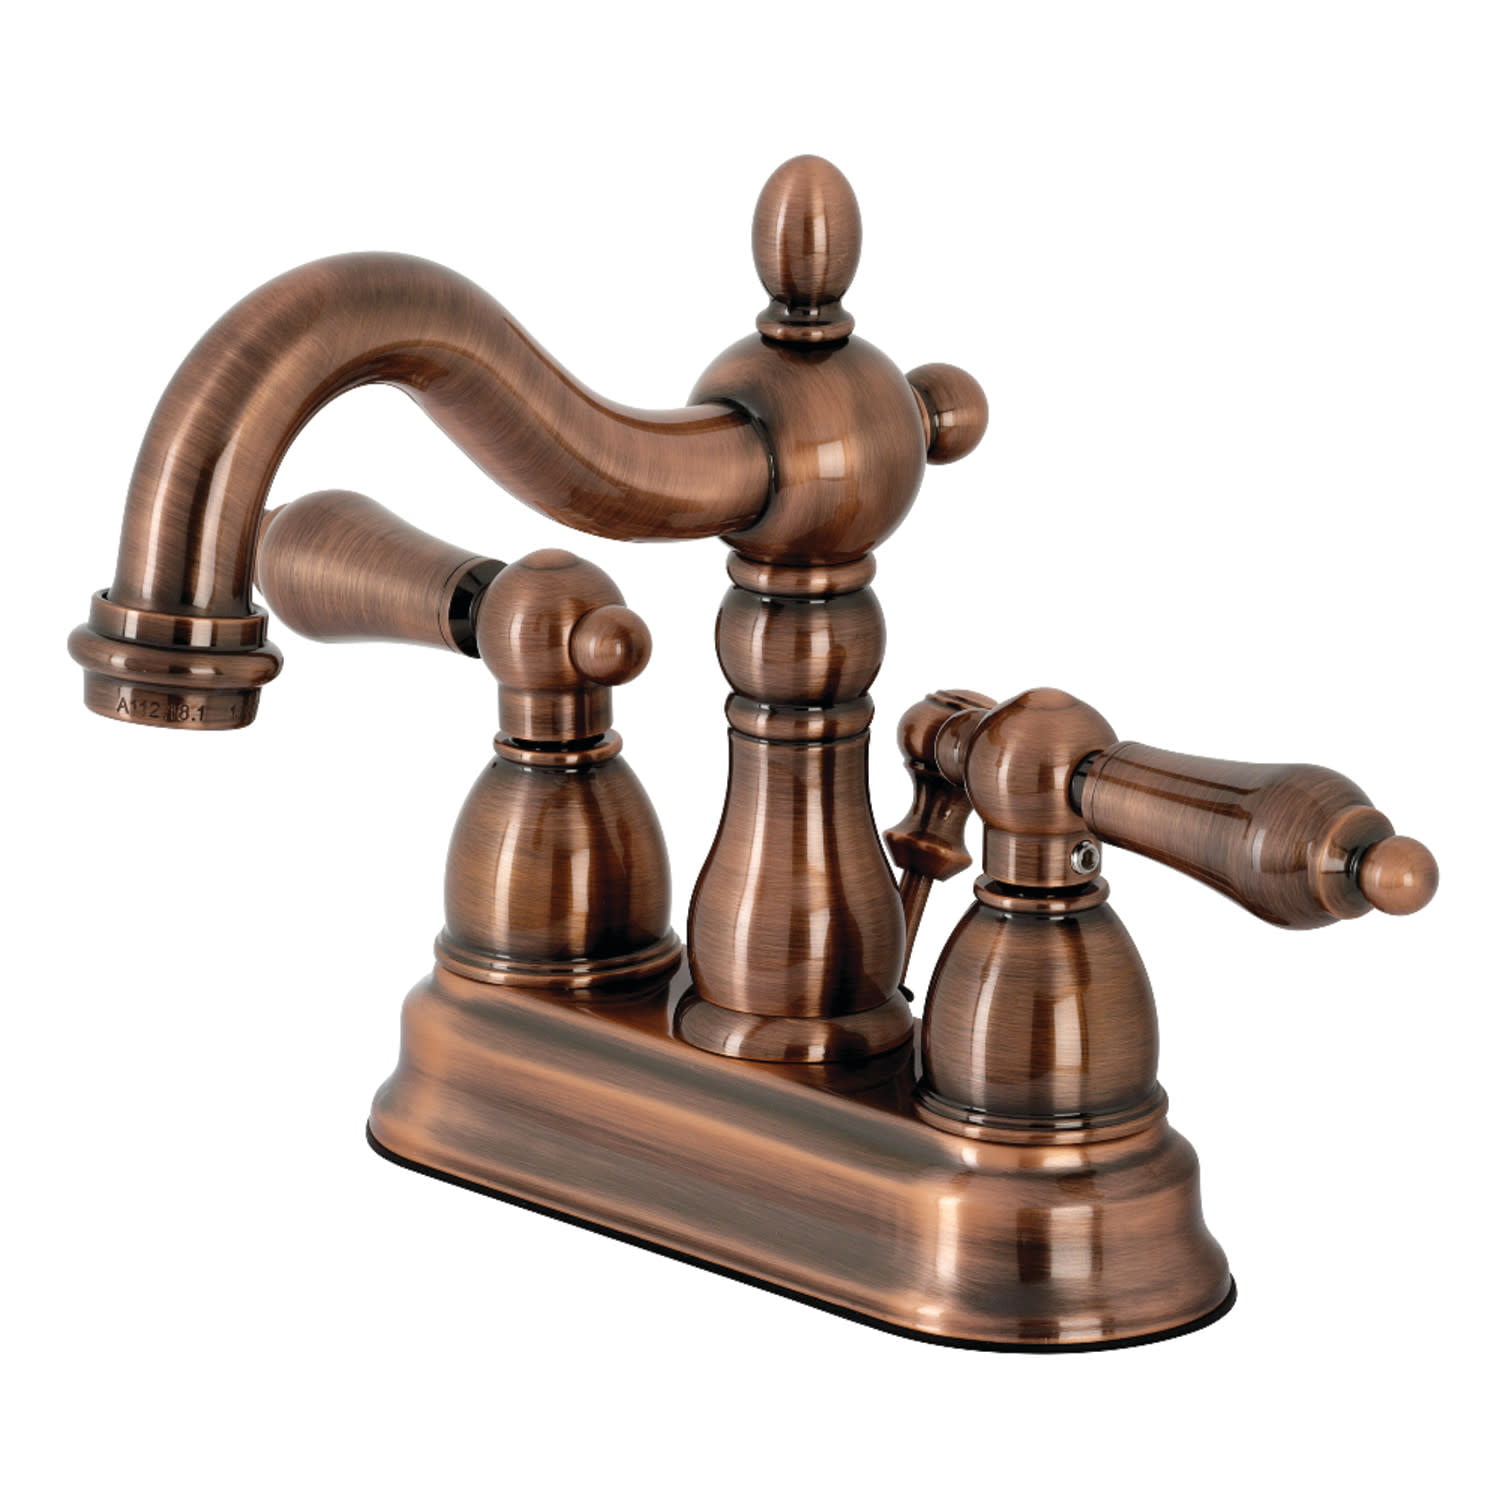 Kingston KB1603AL 4" Centerset Bathroom Sink Faucet Vintage Antique Brass 